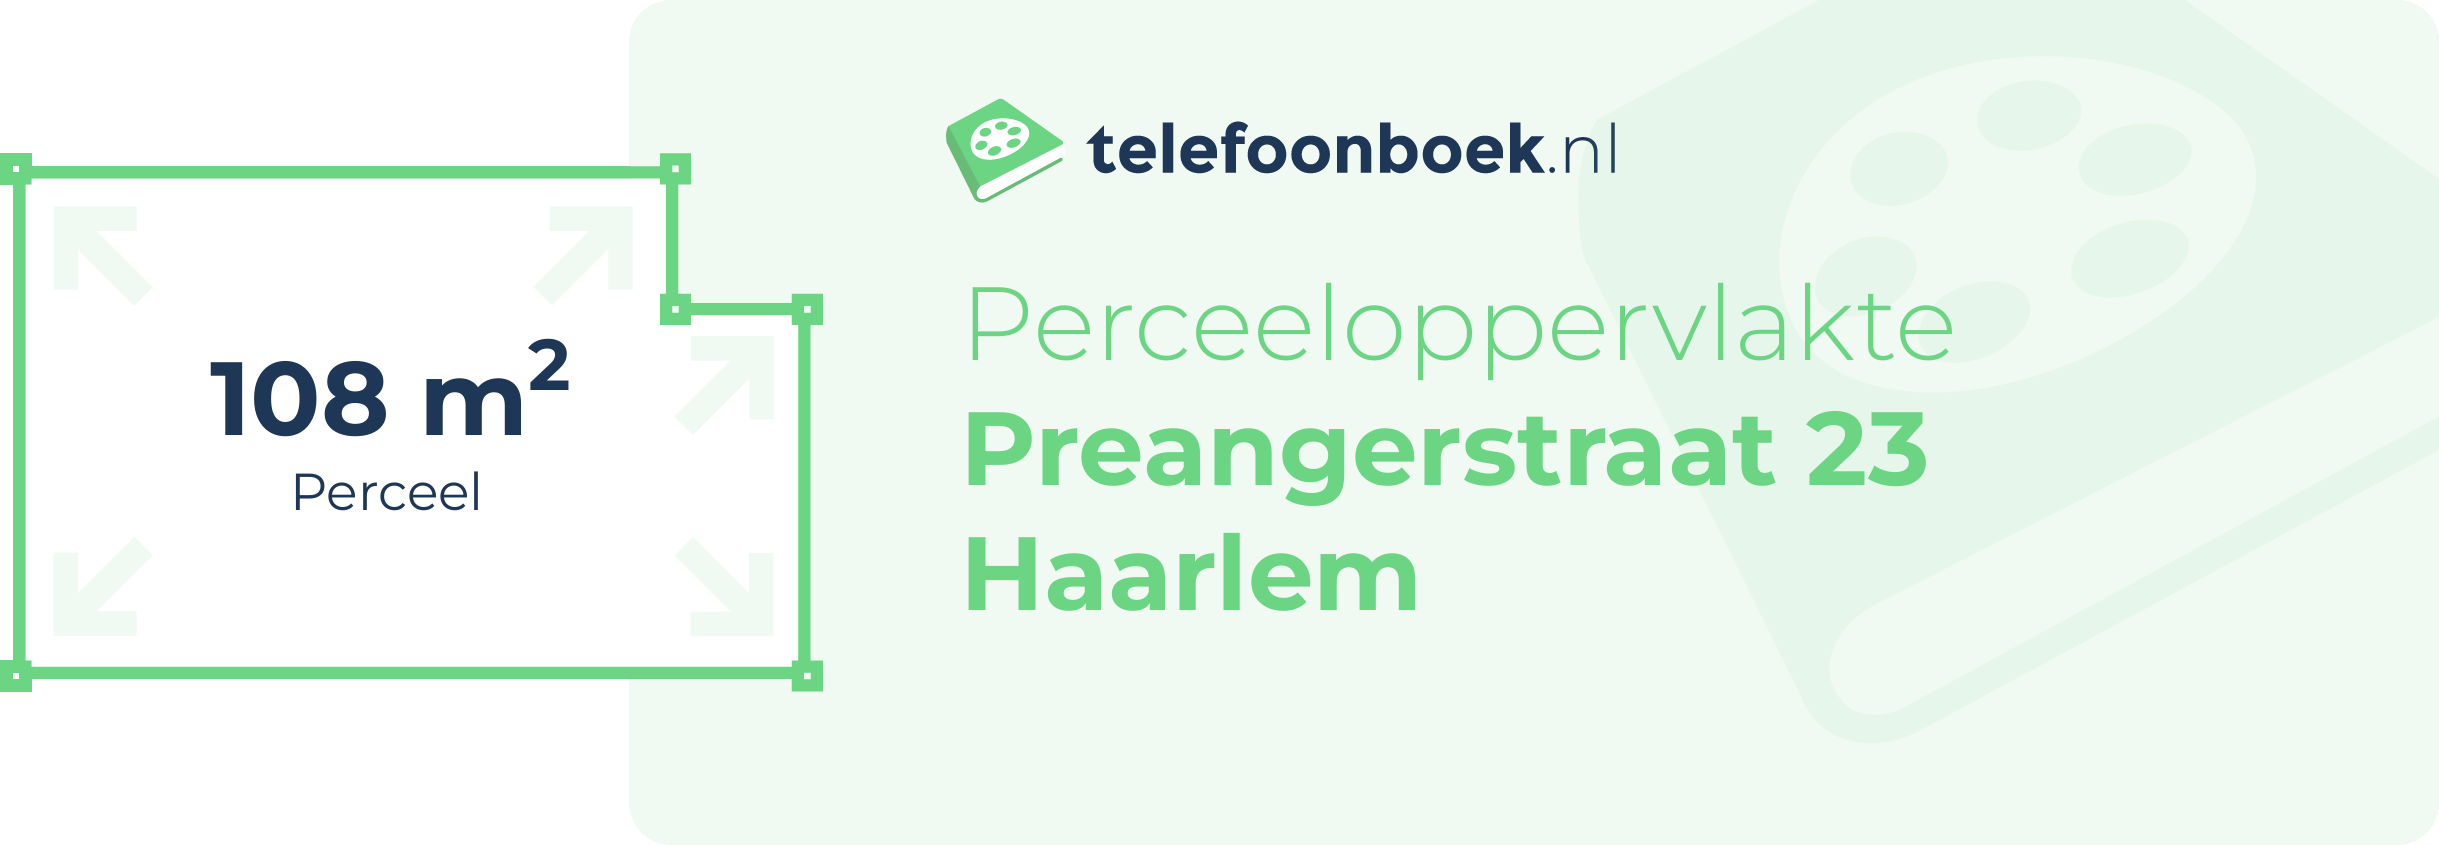 Perceeloppervlakte Preangerstraat 23 Haarlem